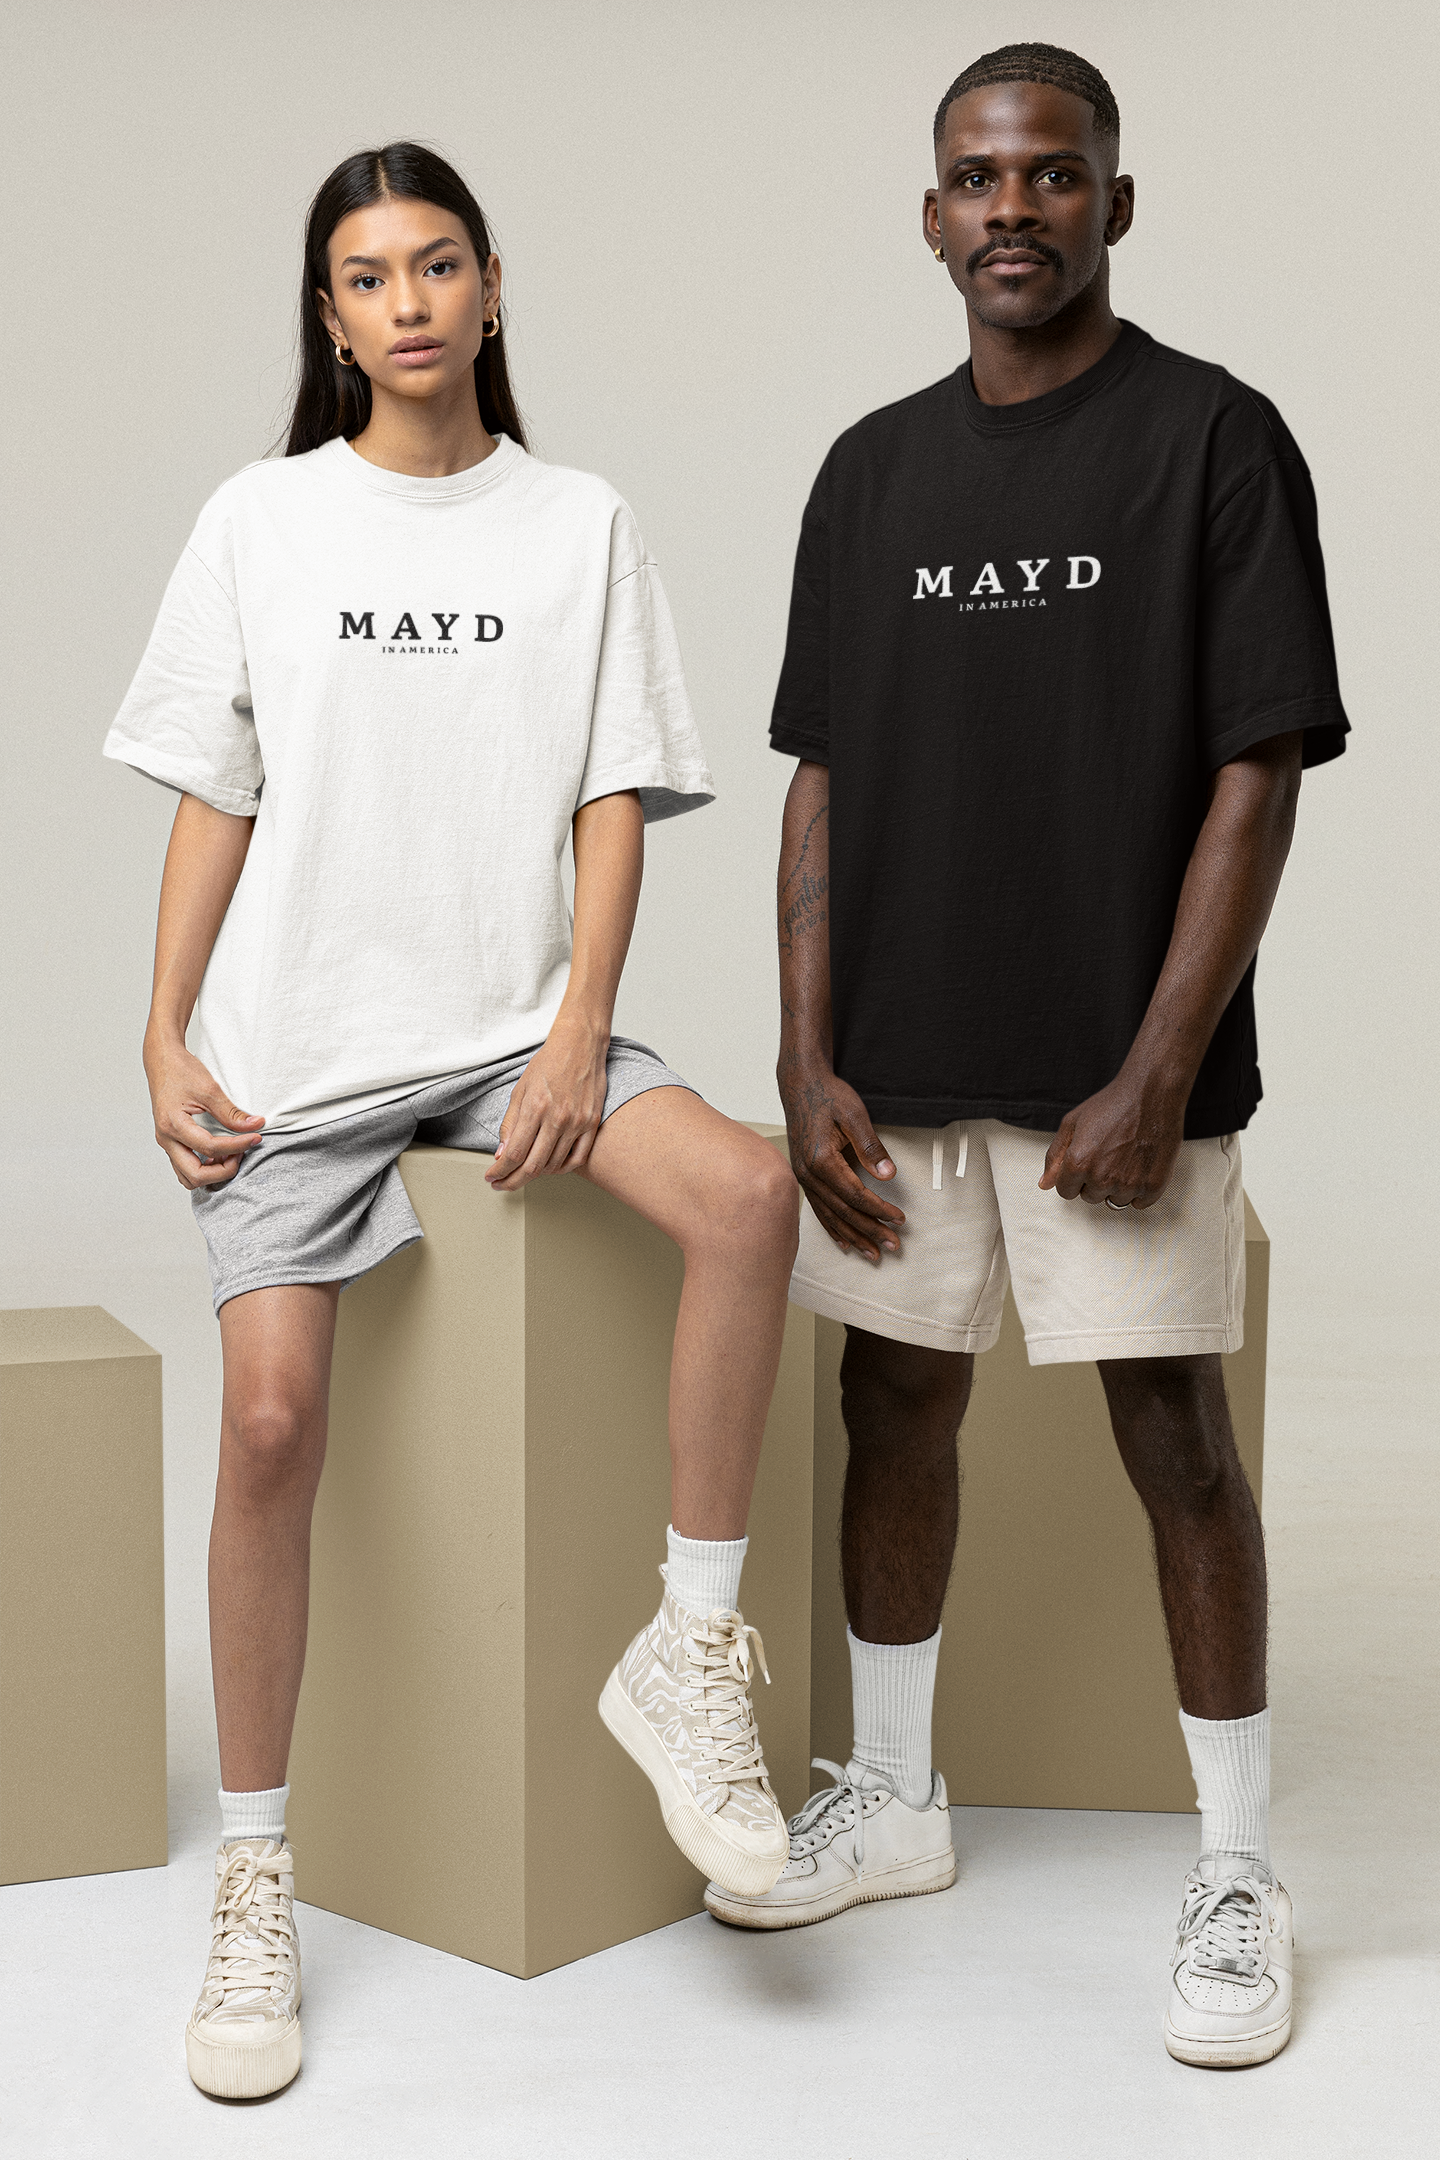 MAYD in America T-shirt